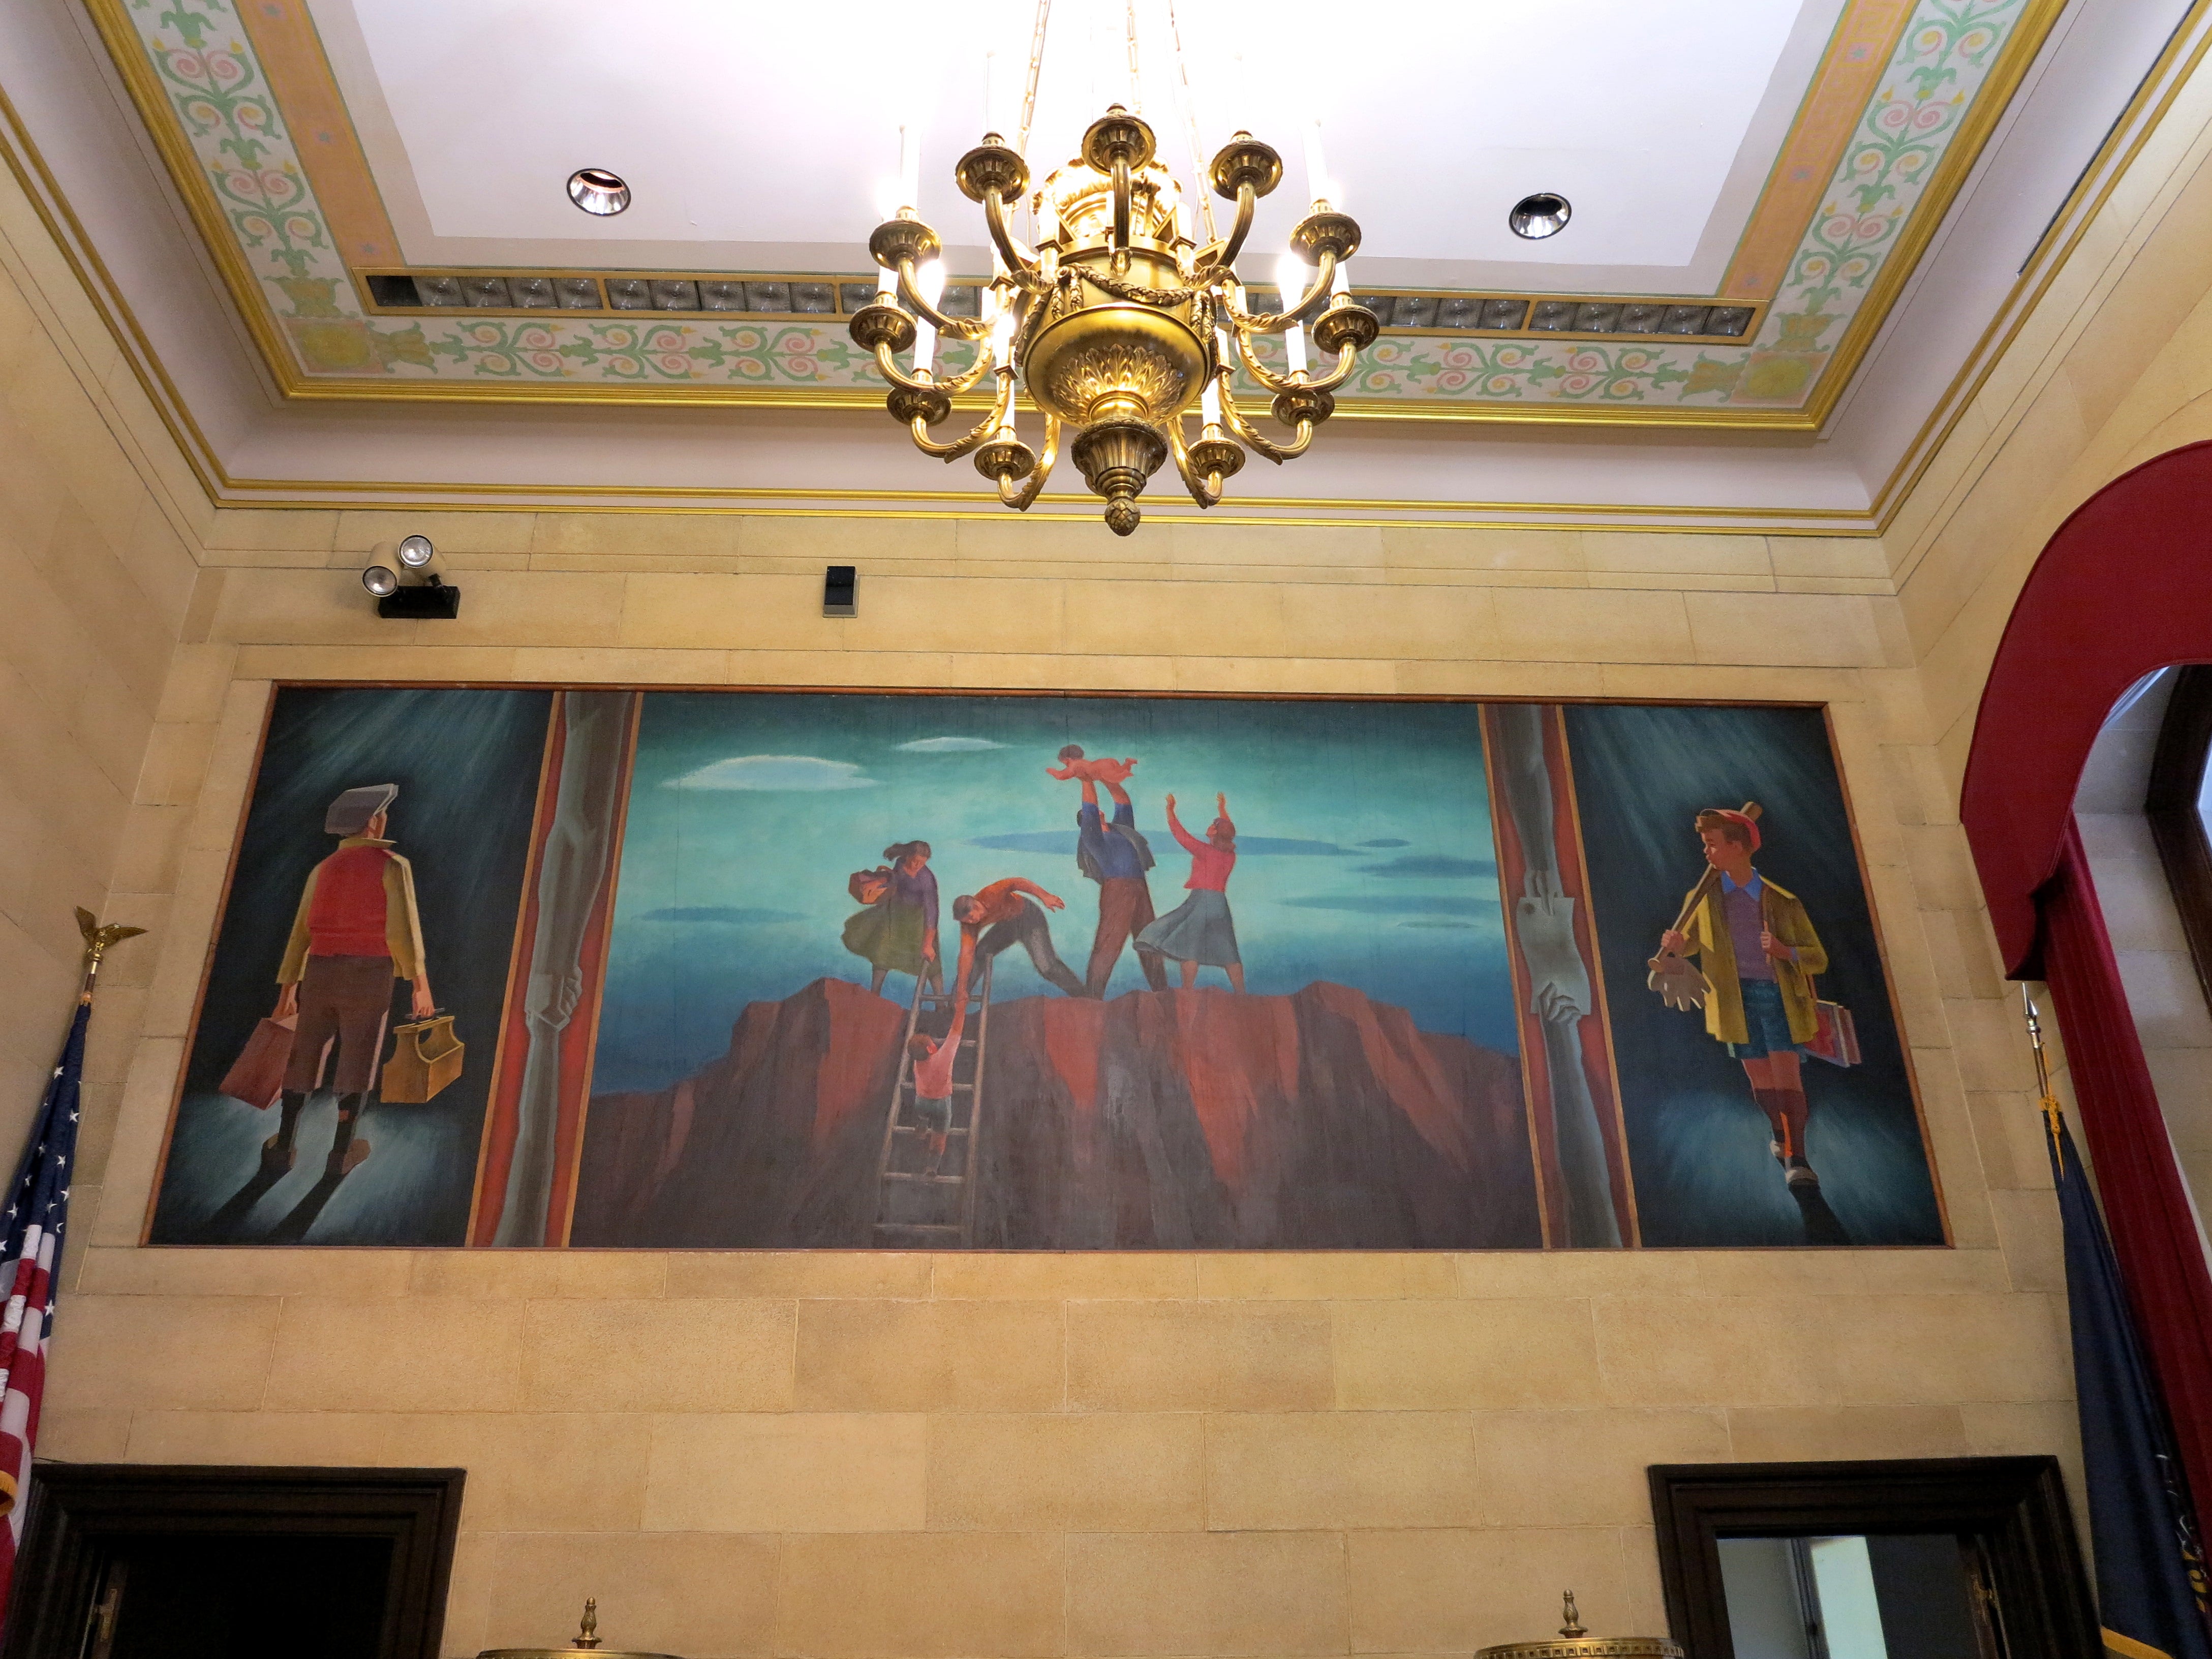 Joseph Hirsch mural, Courtroom C, Family Court